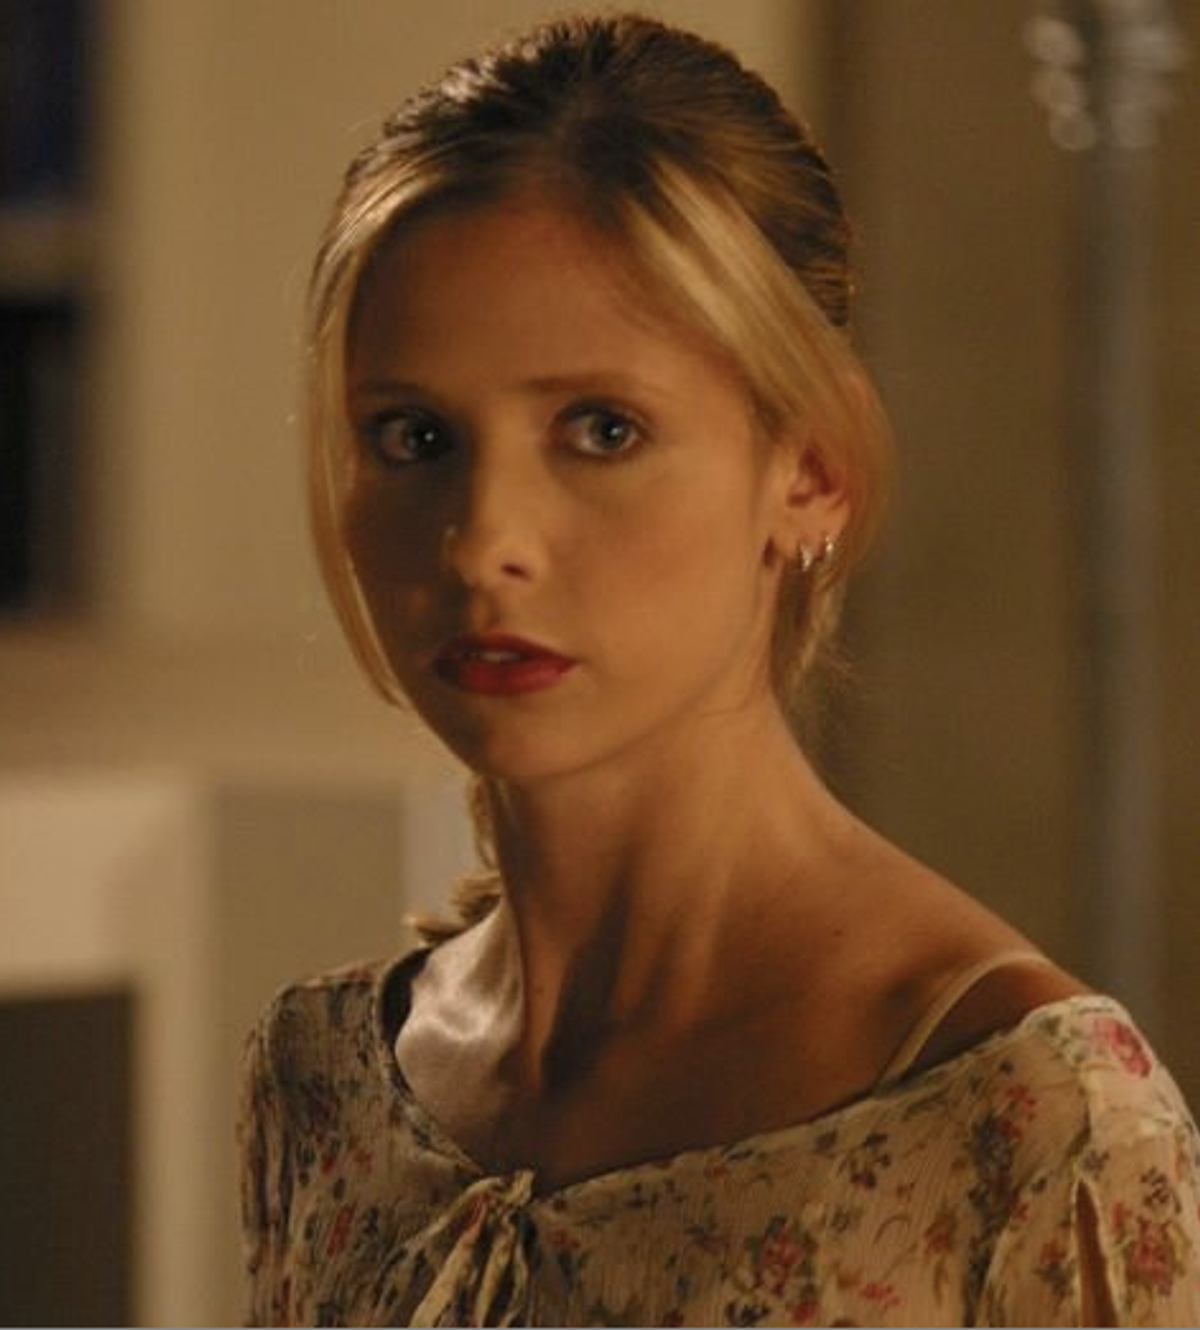 Sarah Michelle Gellar in "Buffy the Vampire Slayer"